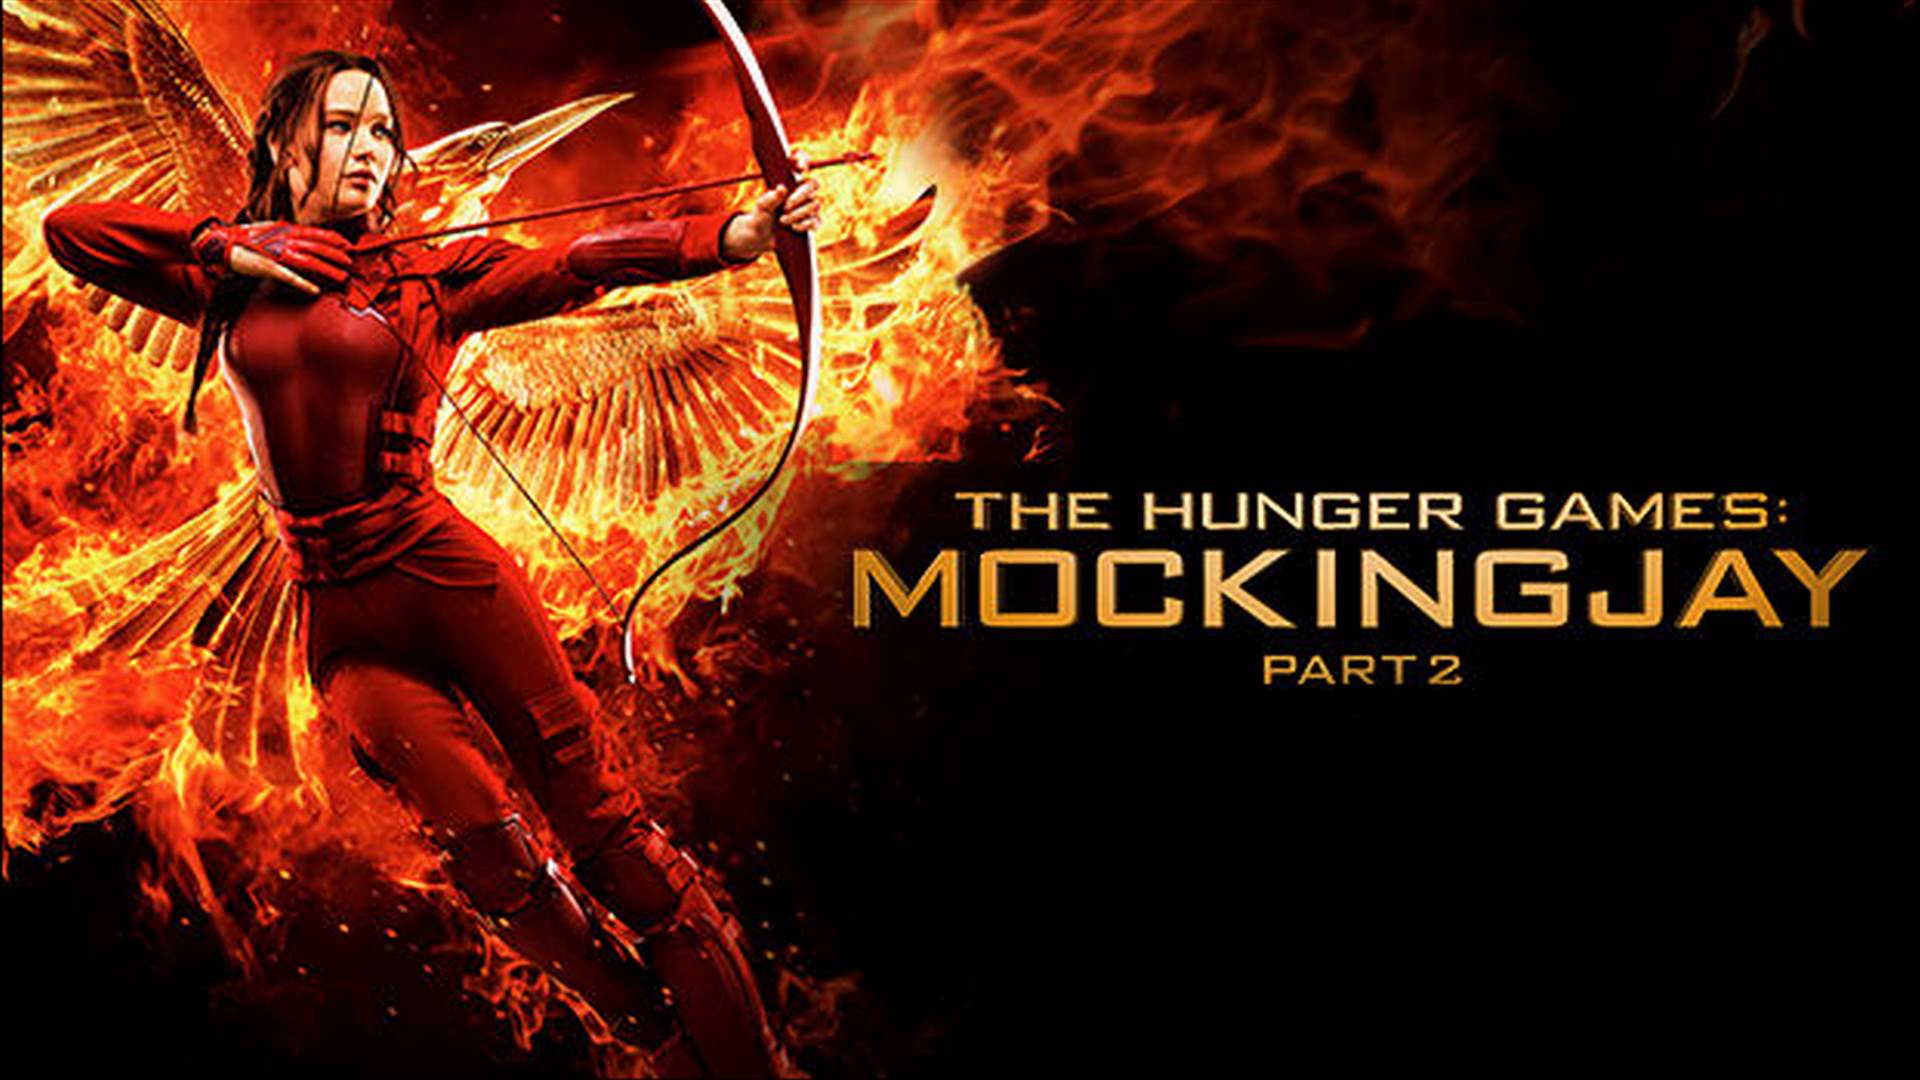 The Hunger Games: Mockingjay 2 HD Wallpaperwallpaper.net